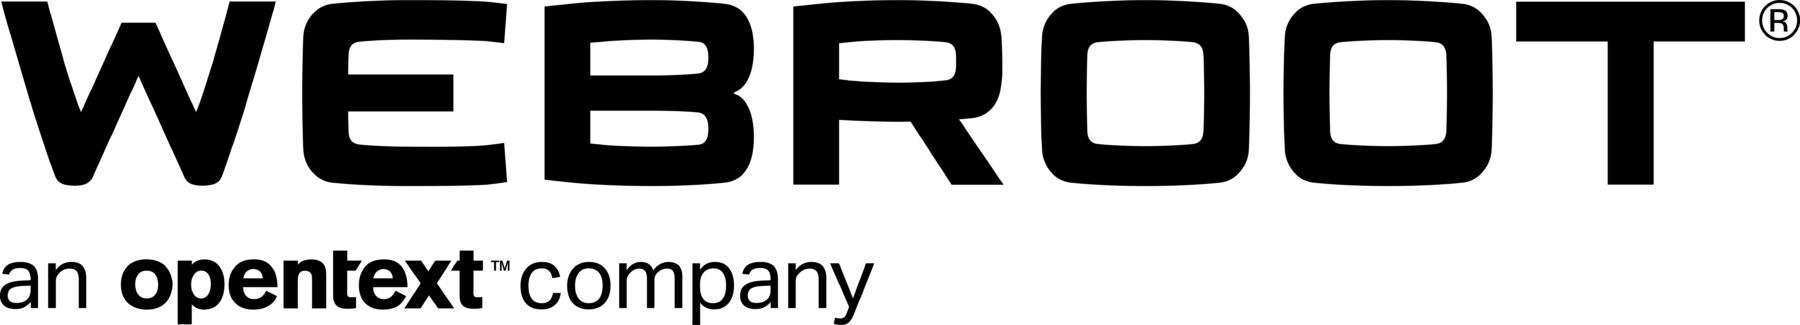 Webroot - an opentext company - logo black